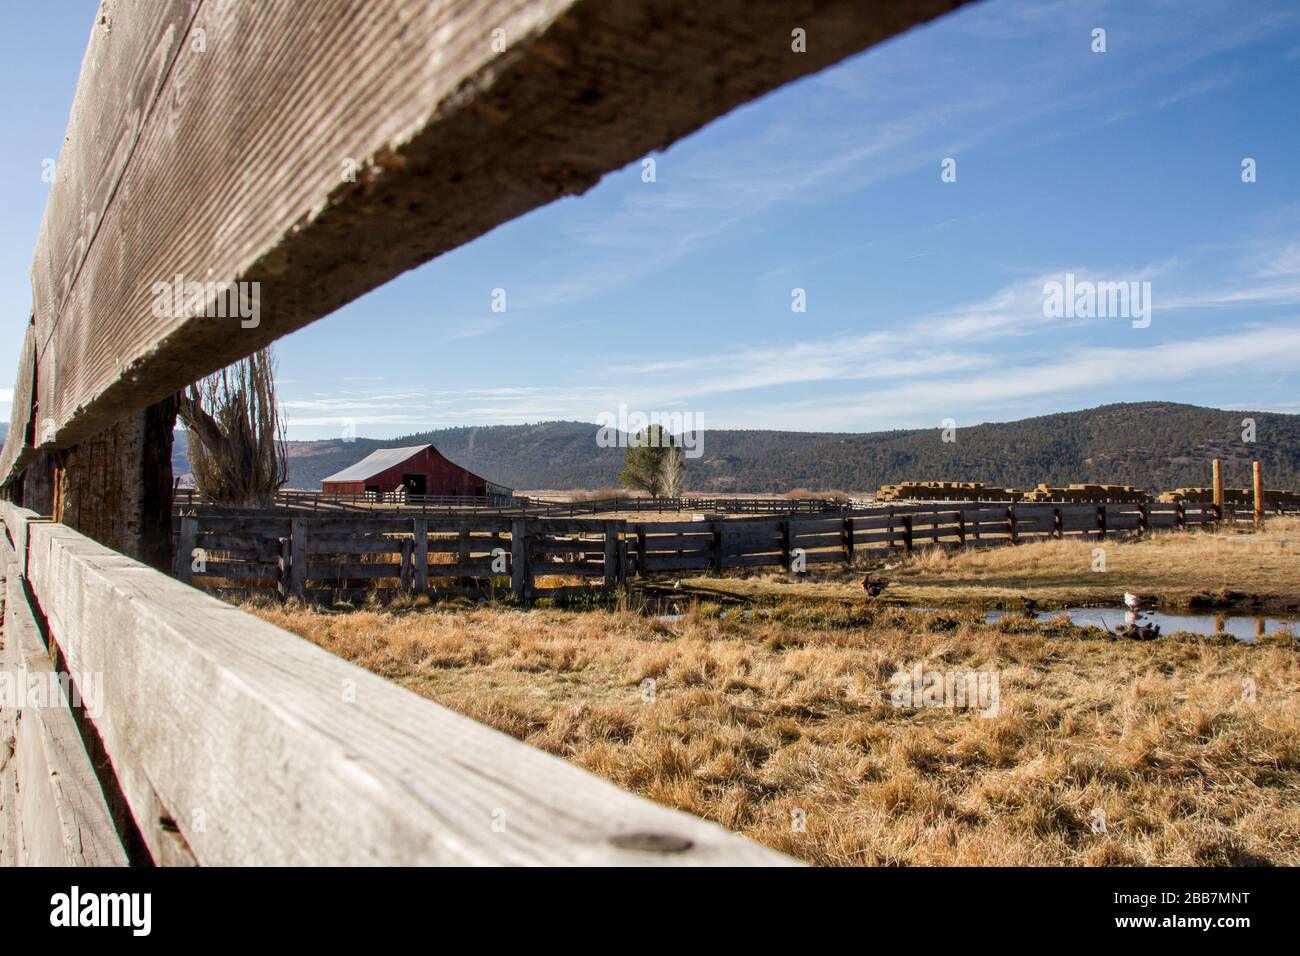 Ranch barn and corral. Stock Photo